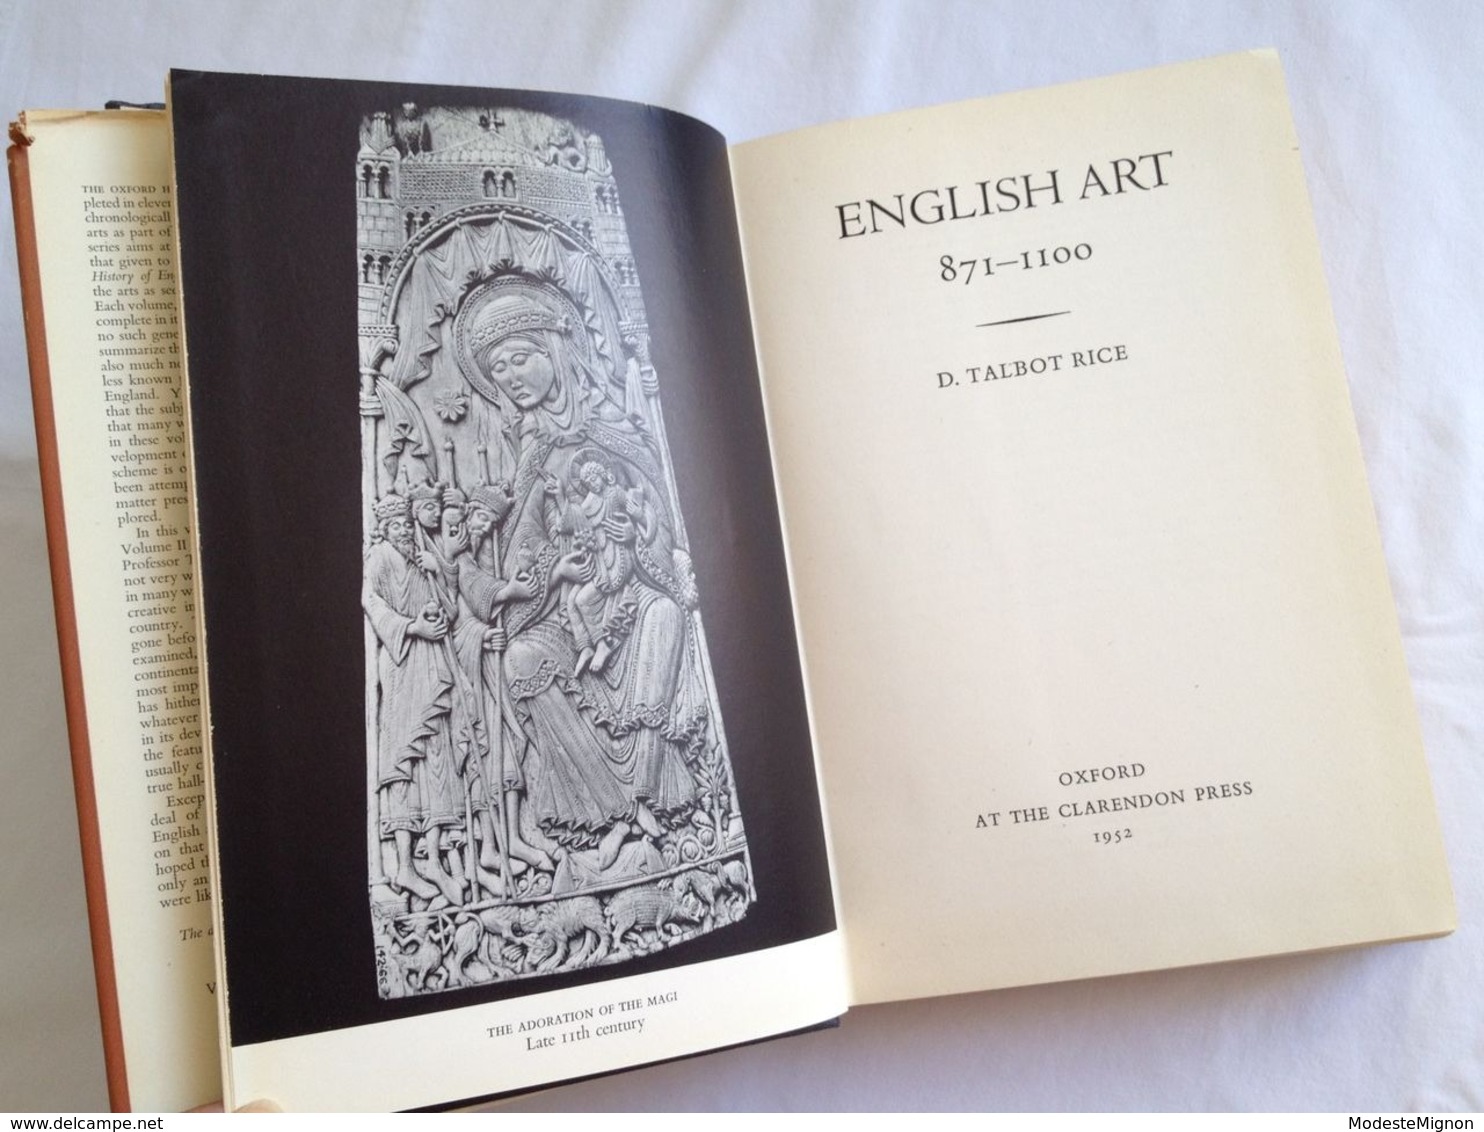 English Art. Volume II : 871 - 1100 by D. Talbot Rice